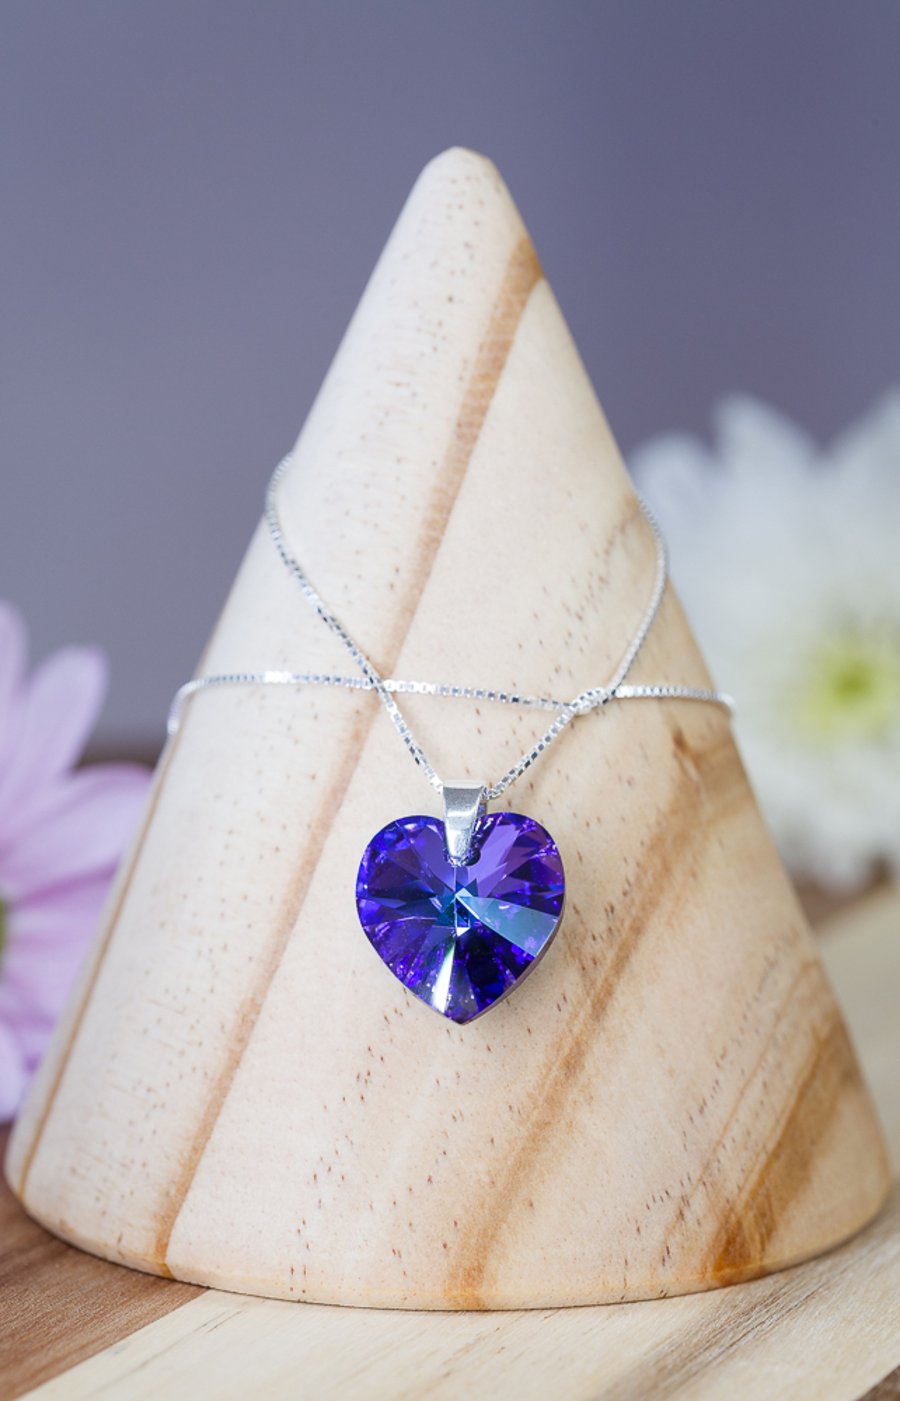 Necklace pendant swarovski purple heart on sterling silver chain